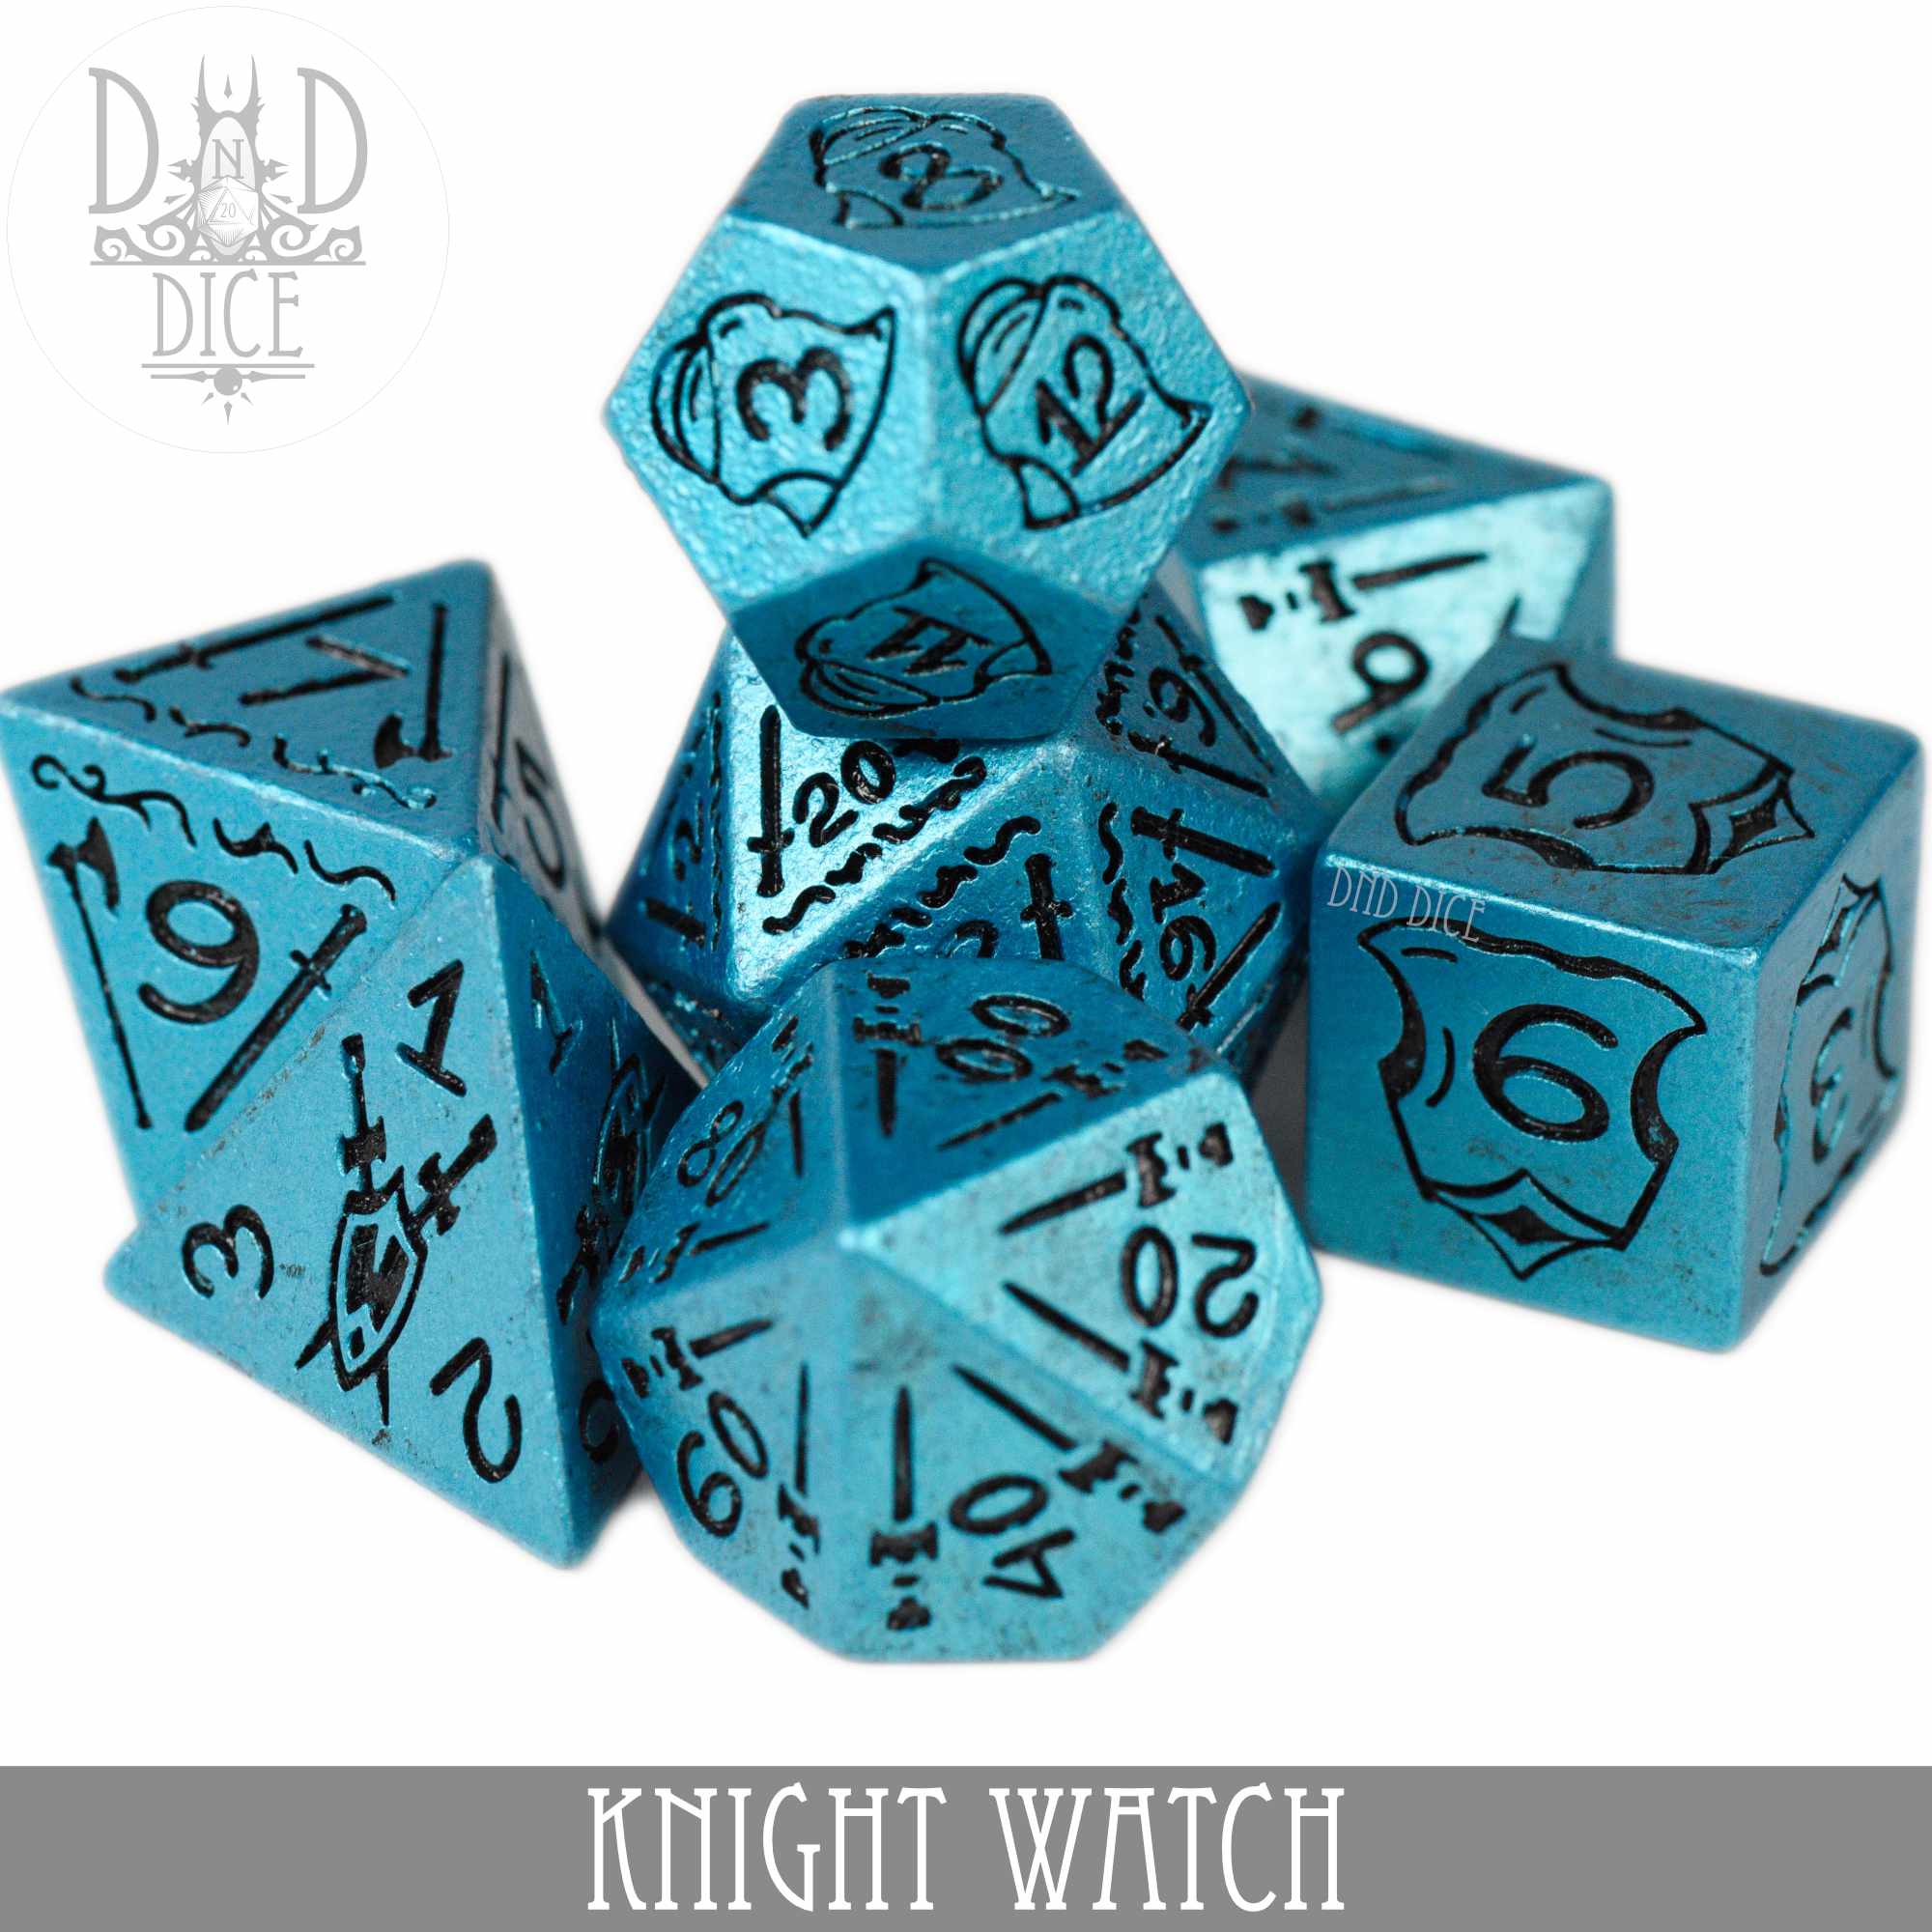 Knight Watch Dice Set